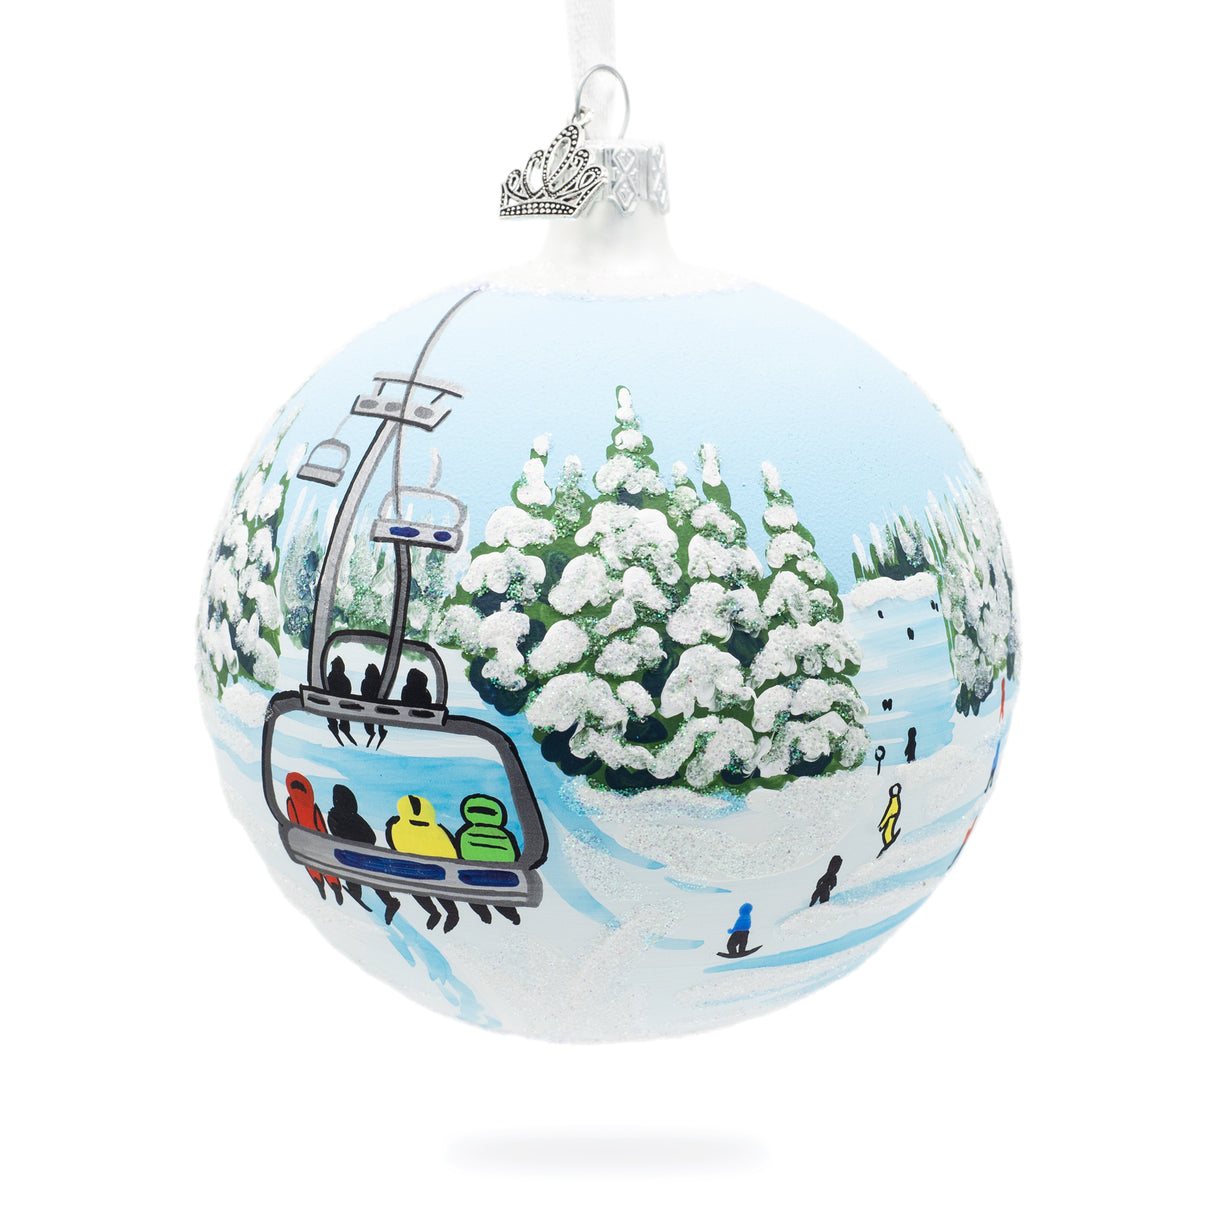 Keystone Ski Resort, Colorado, USA Glass Ball Christmas Ornament 4 Inches in White color, Round shape